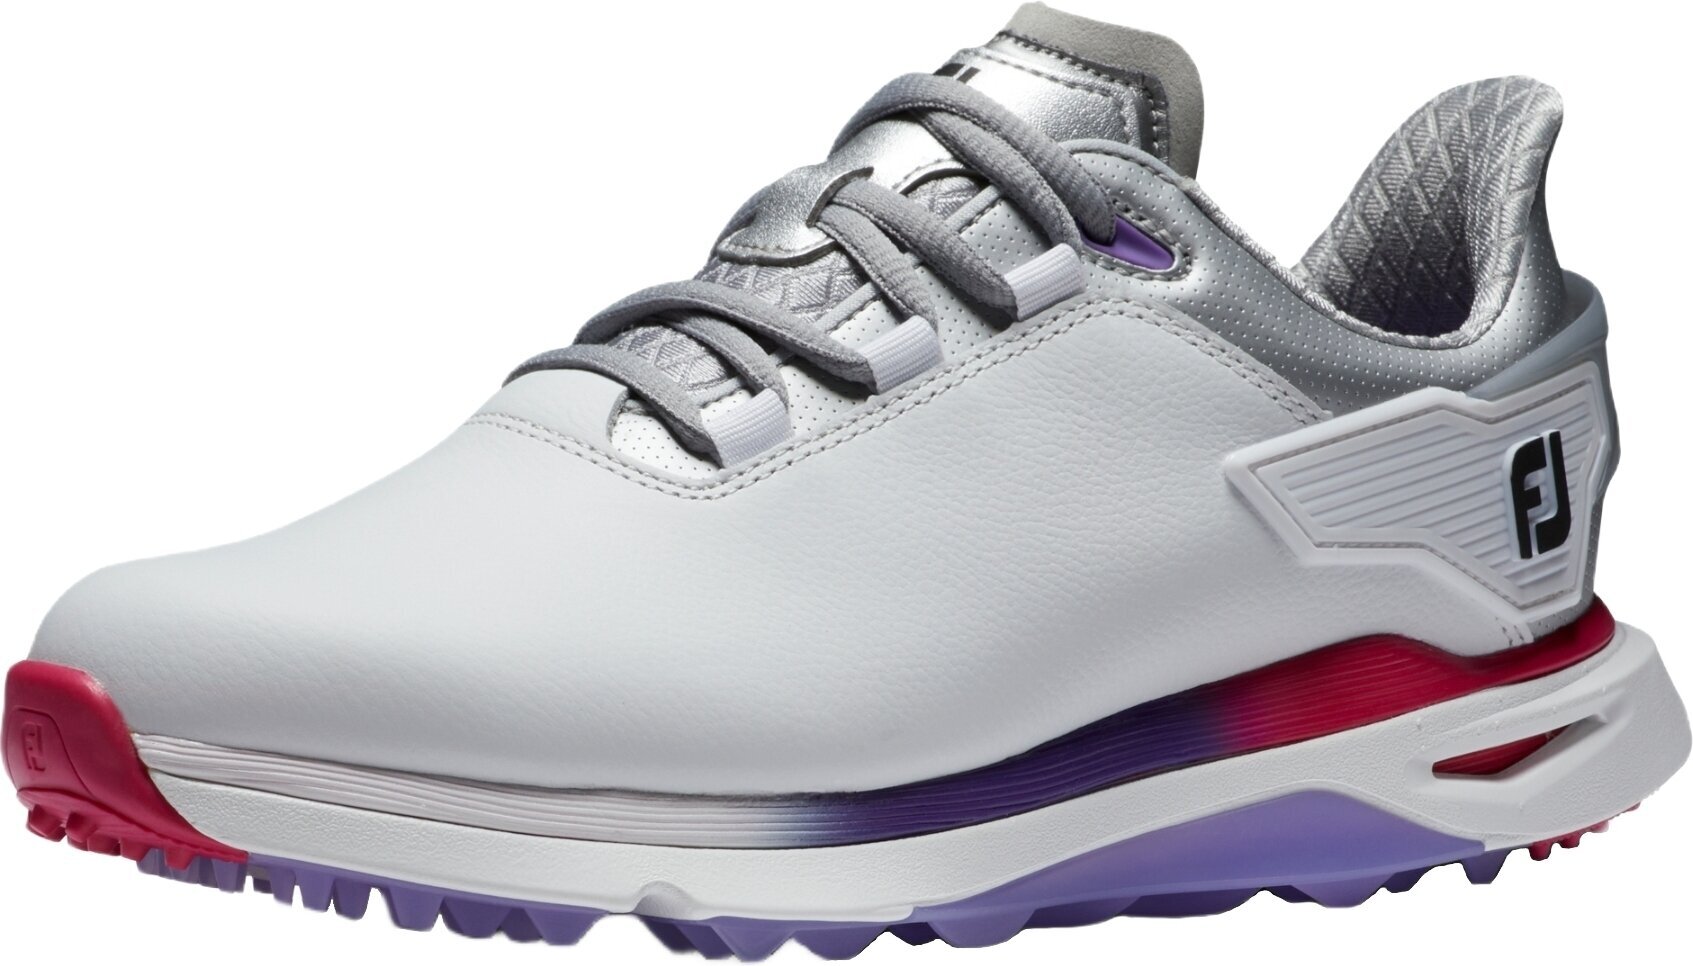 Footjoy PRO SLX Womens Golf Shoes White/Silver/Multi 38